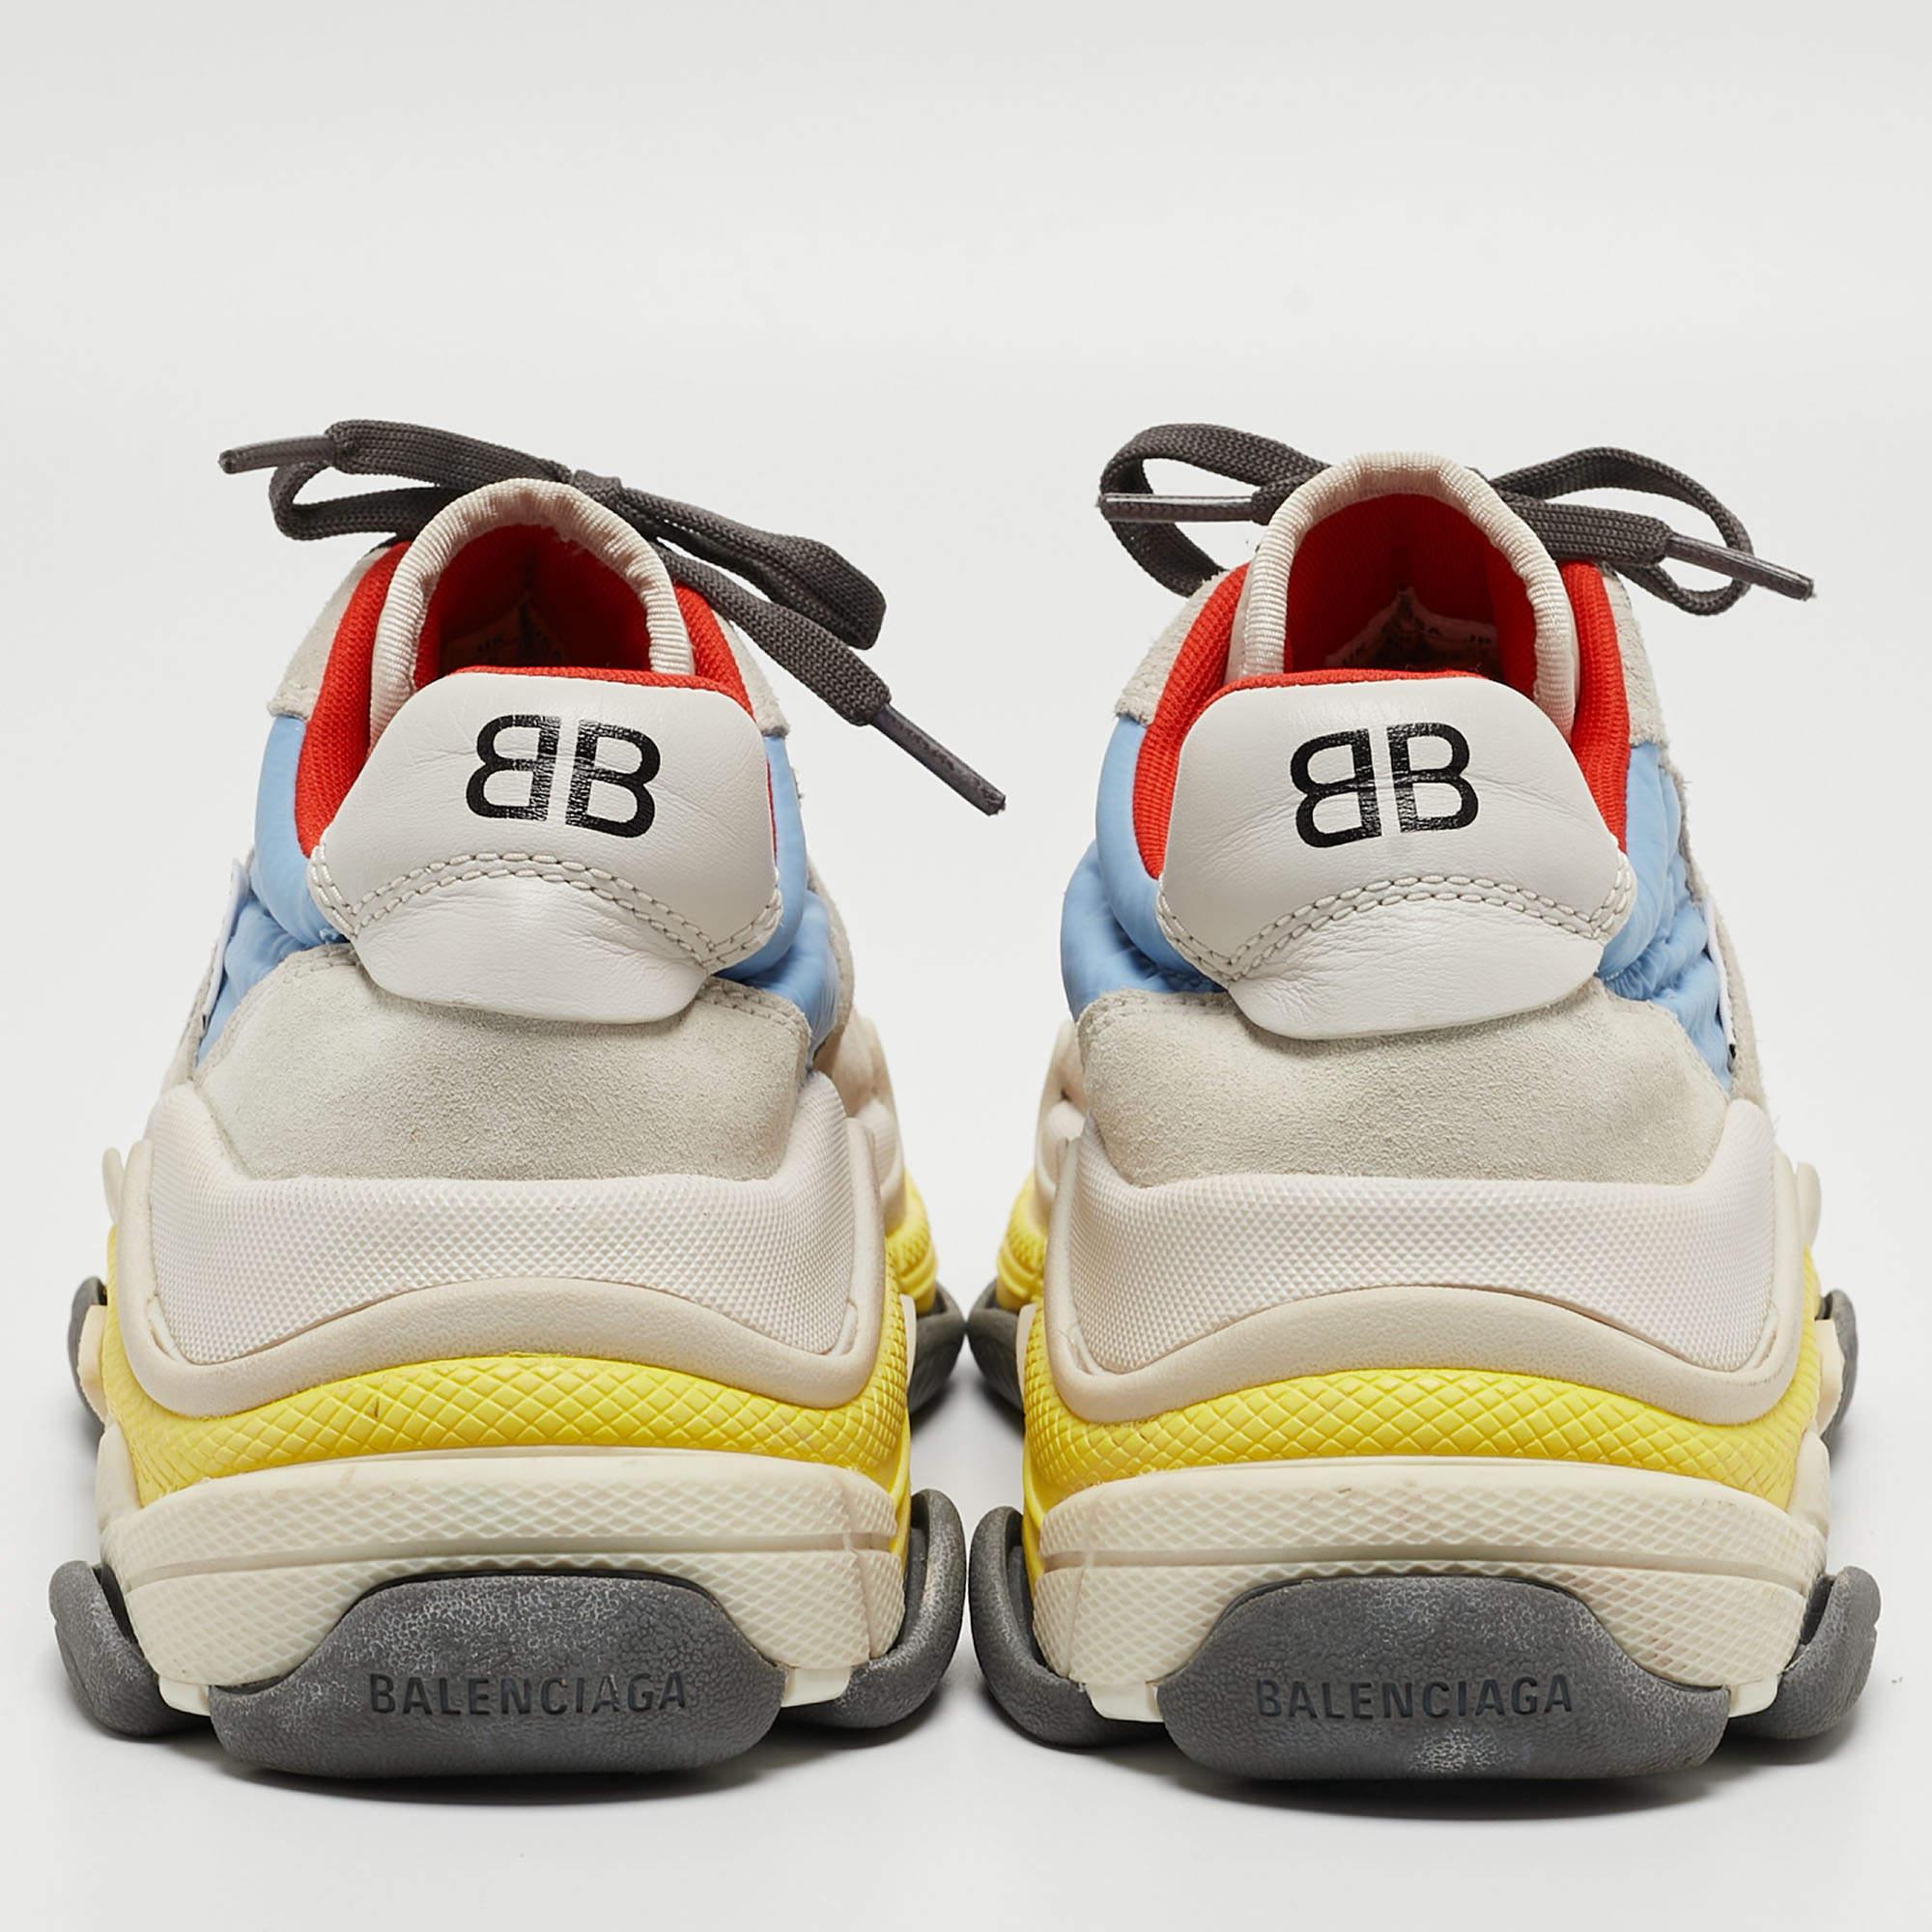 Balenciaga Multicolor Suede and Nylon Triple S Sneakers Size 39 2